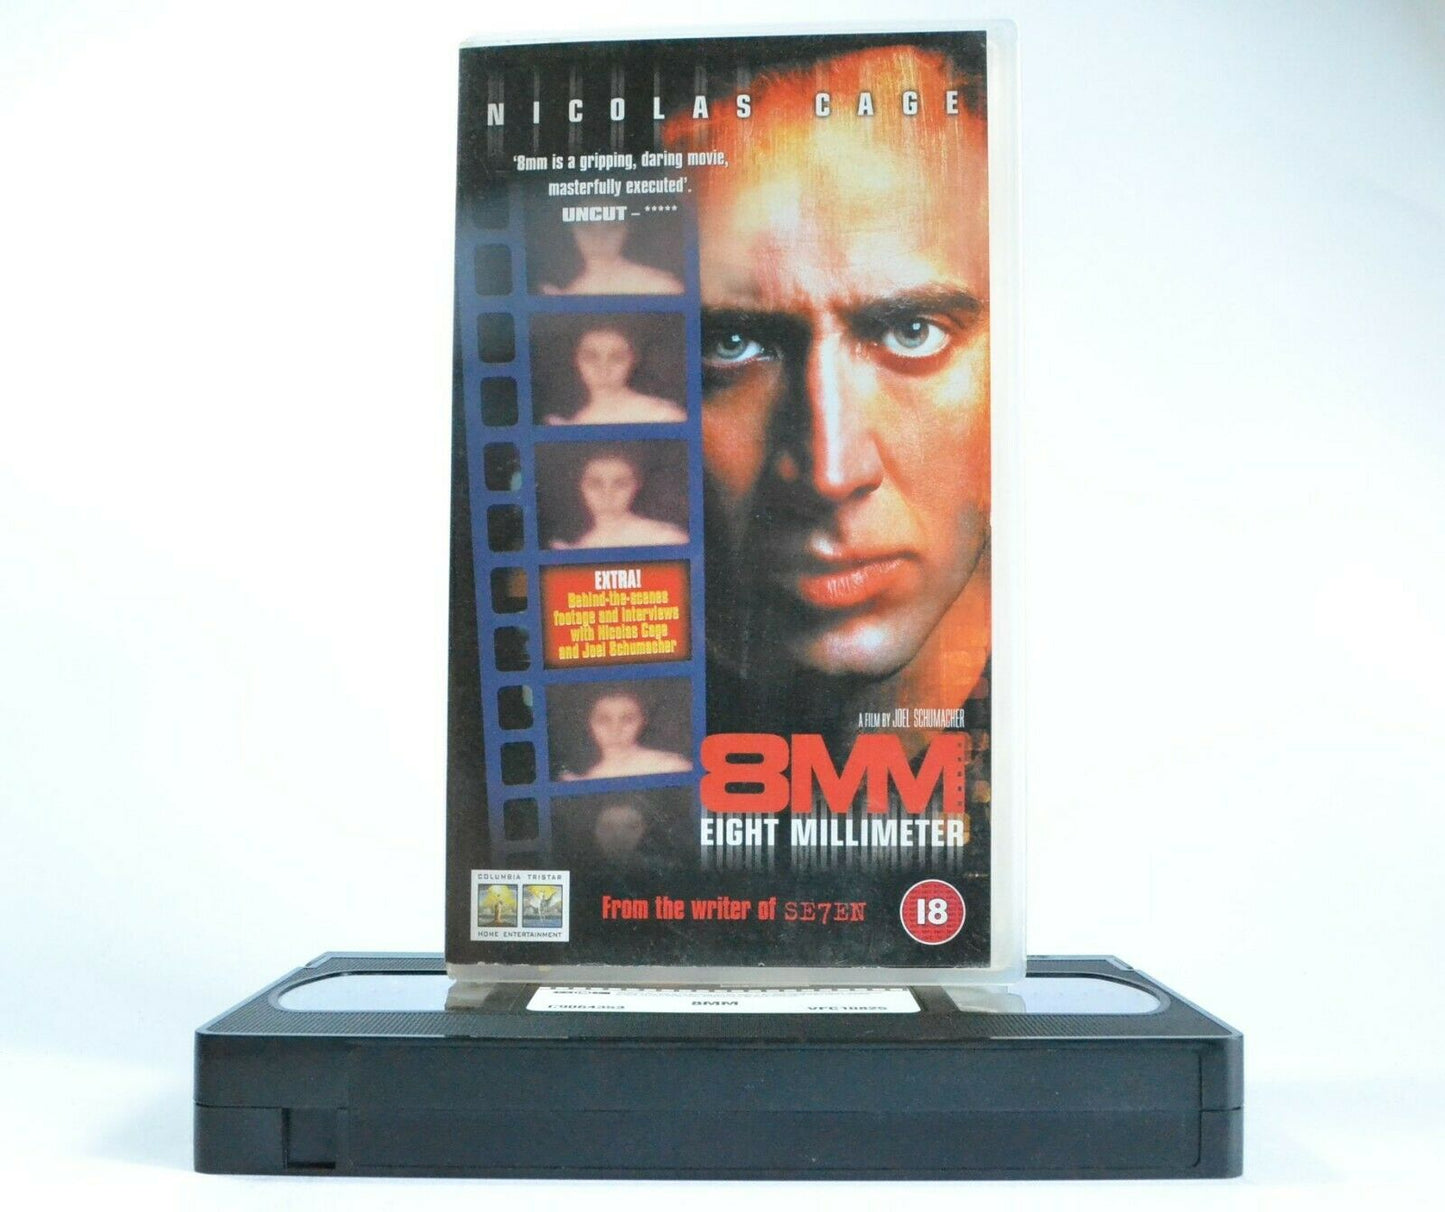 8MM (Eight Millimeter): A J.Schumacher Film (1999) - Crime Action - N.Cage - VHS-